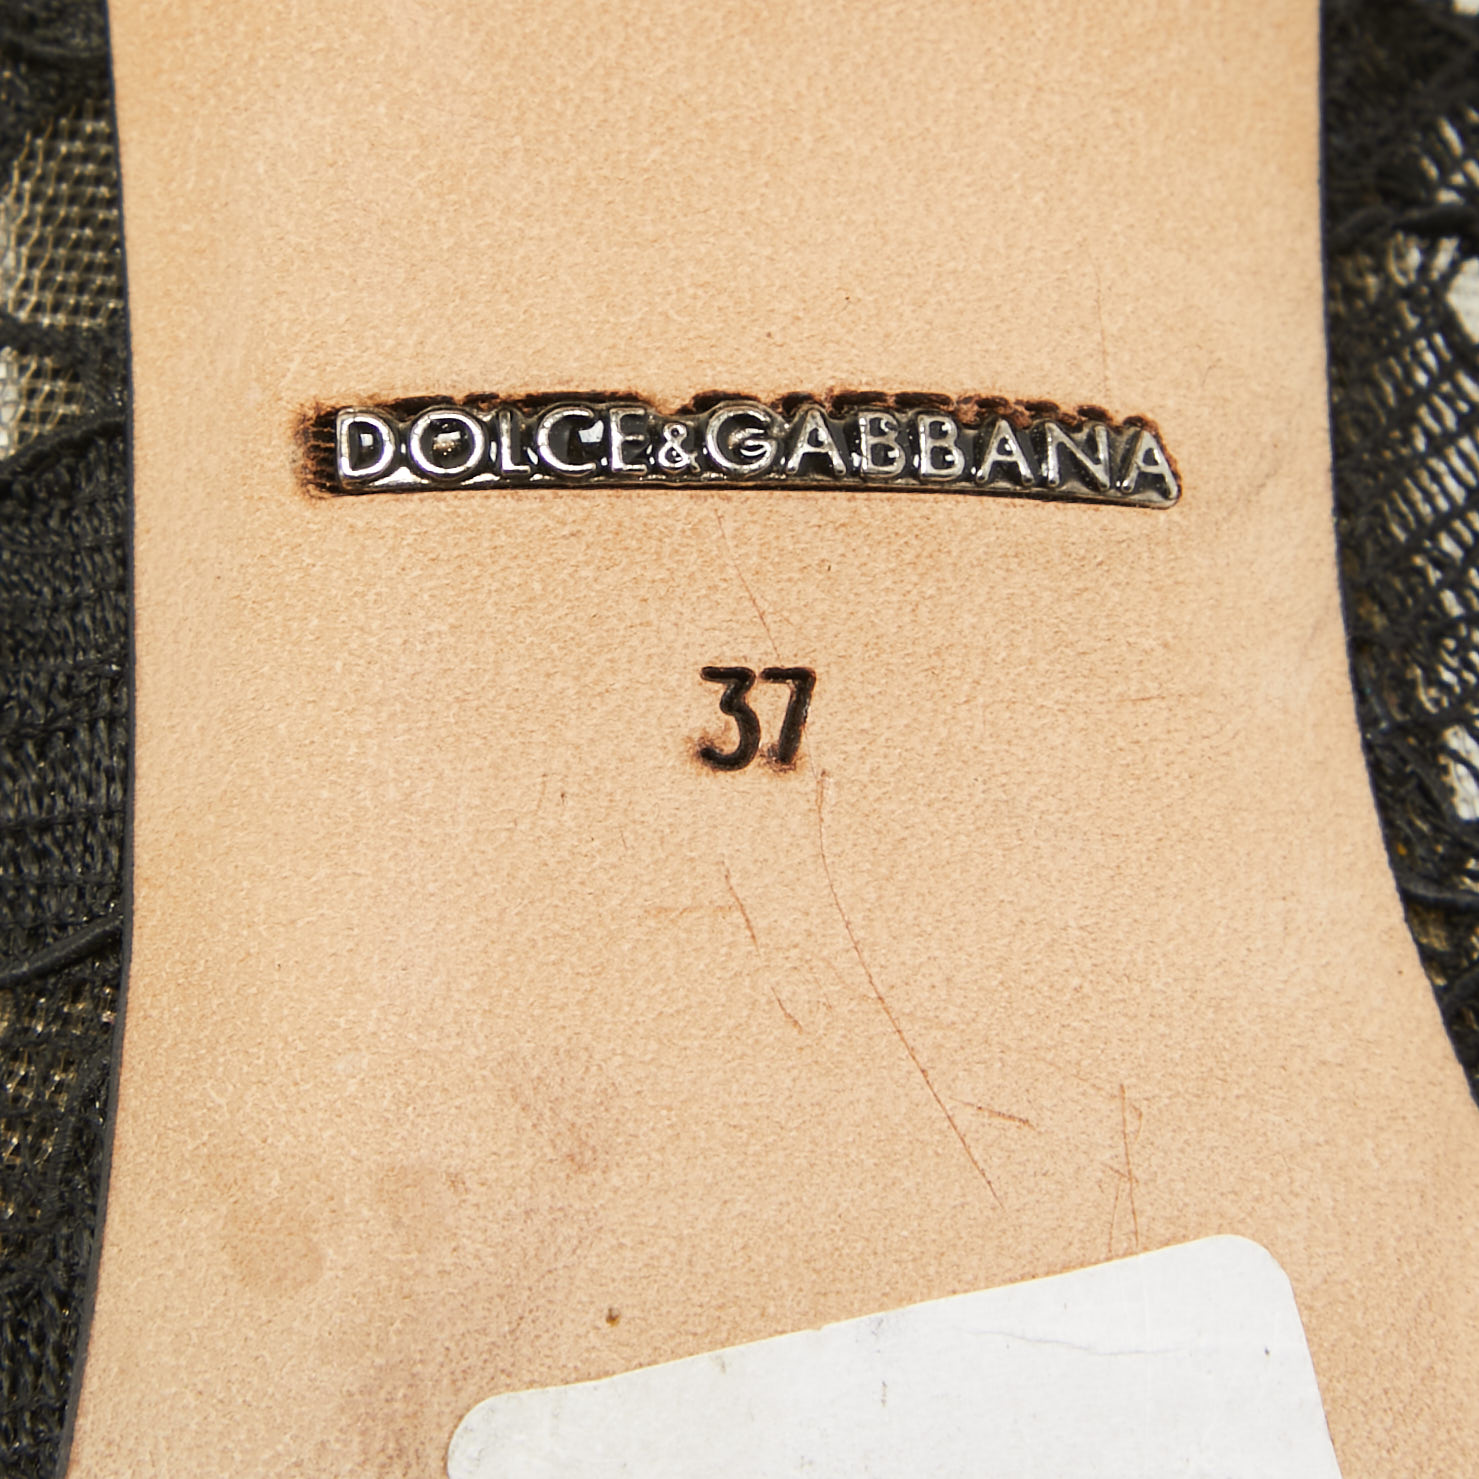 Dolce & Gabbana Black Lace Bellucci Pumps Size 37